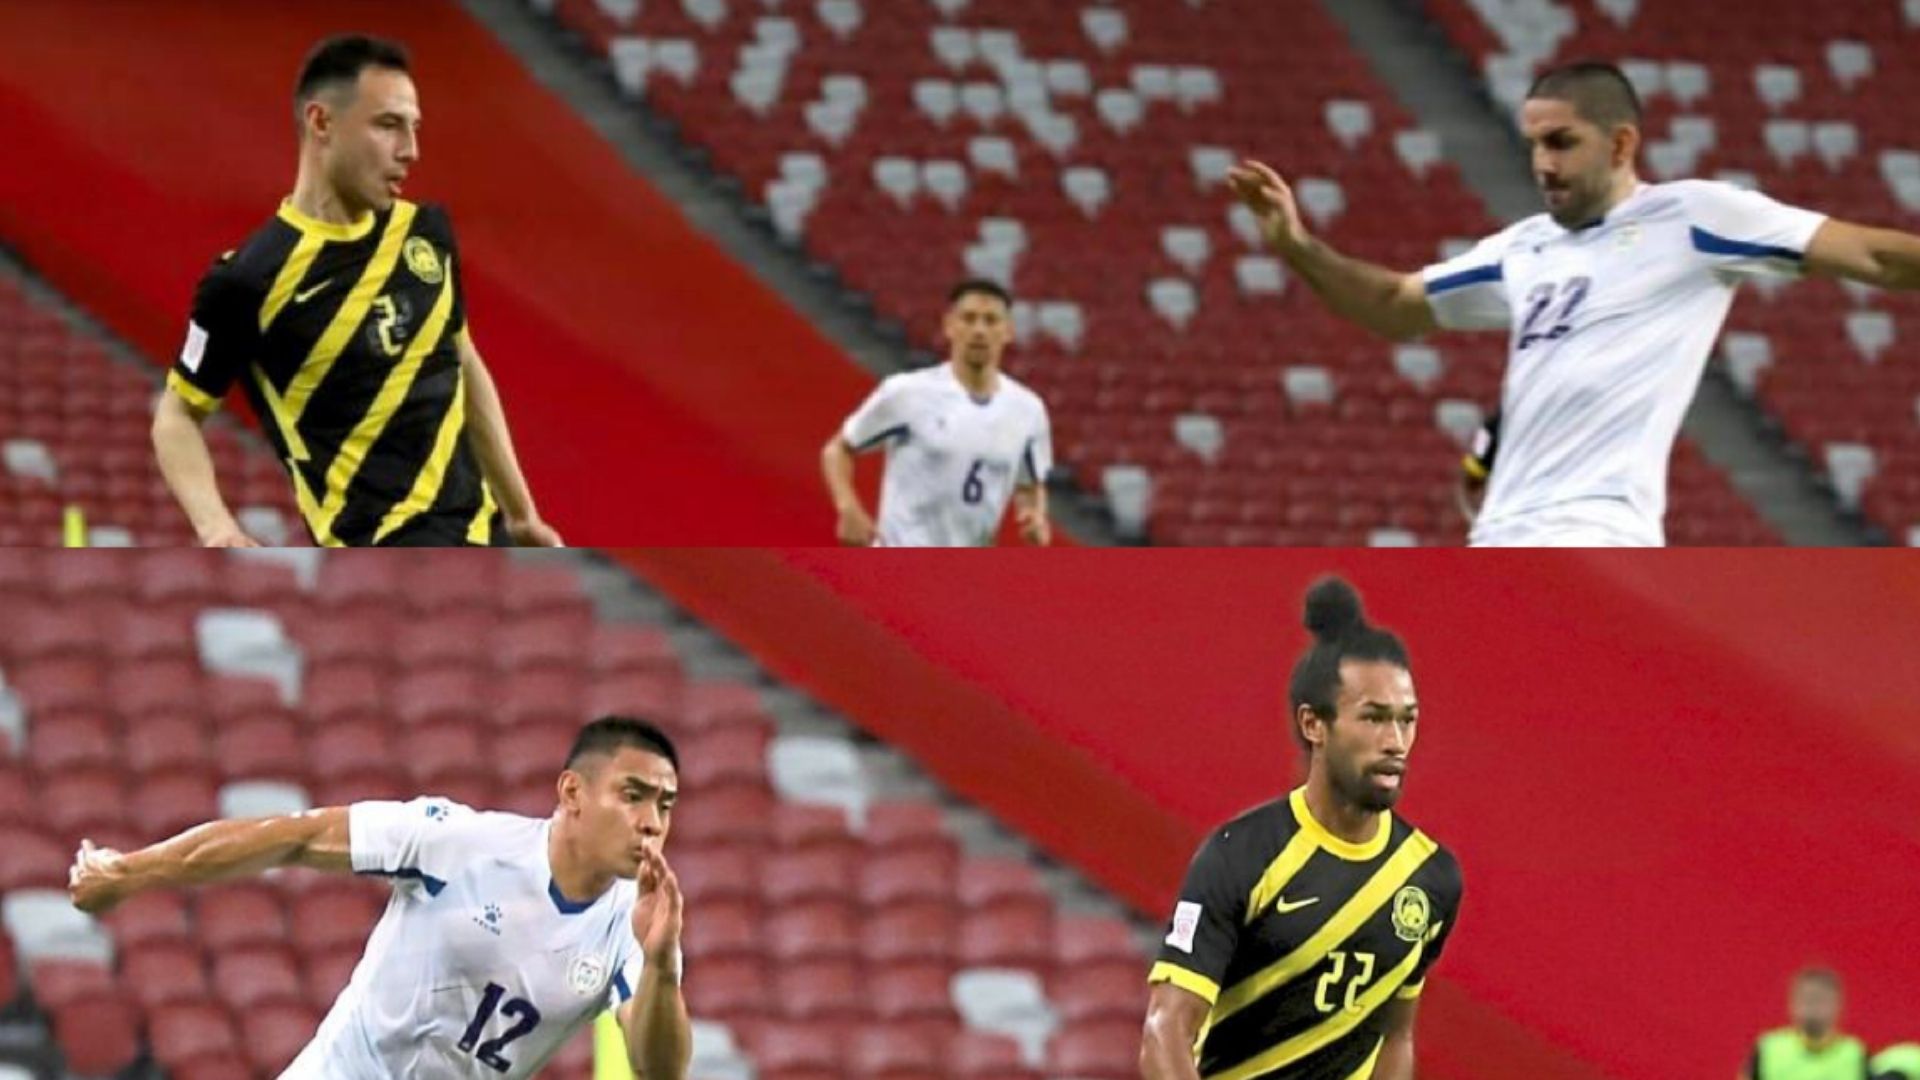 Corbin Dion Cools 11 Pemain Kesebelasan Utama Malaysia Paling Bernilai